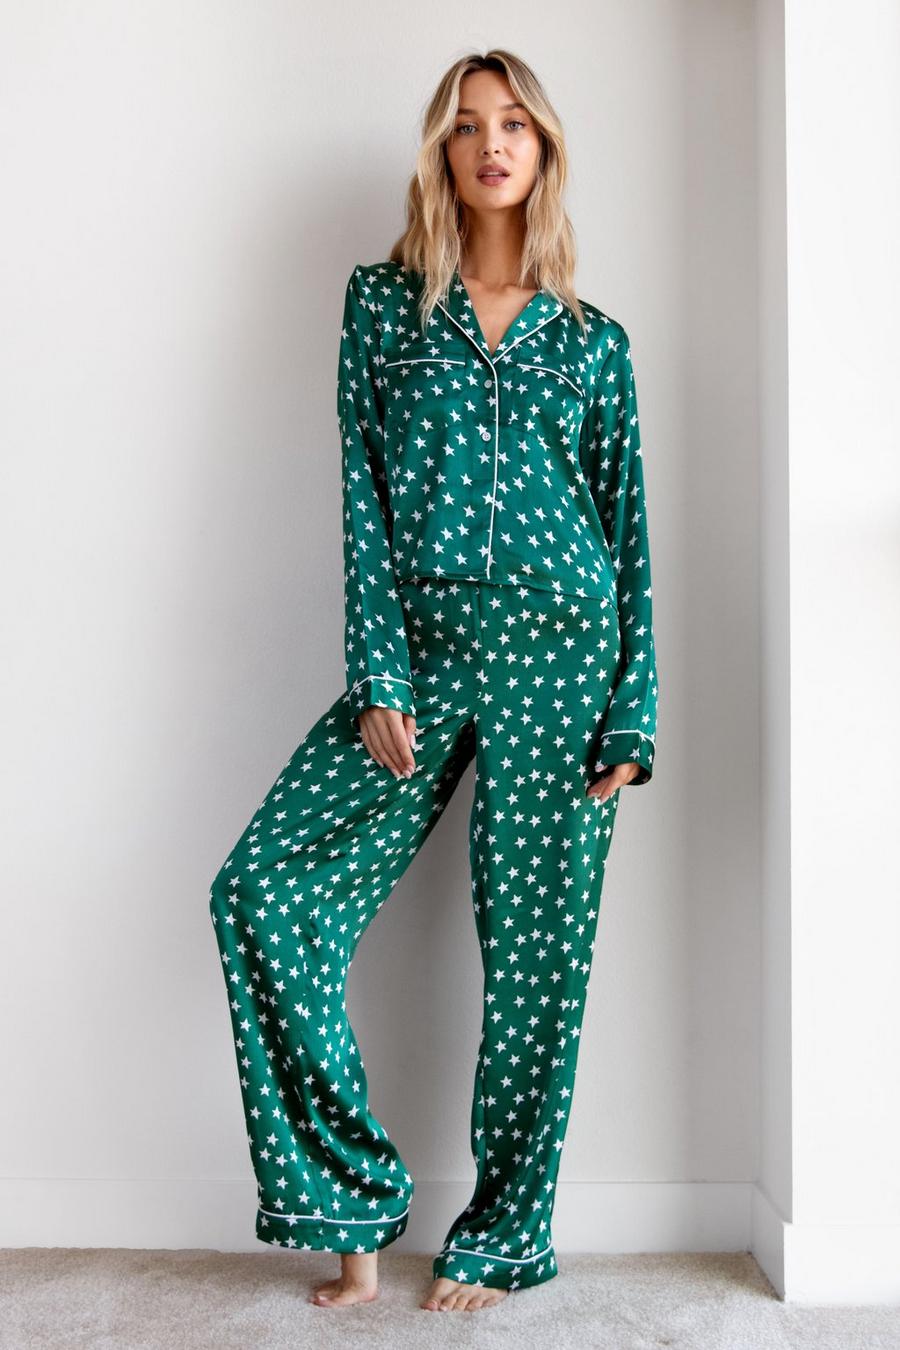 Star Satin Pajama Shirt and Pants Set